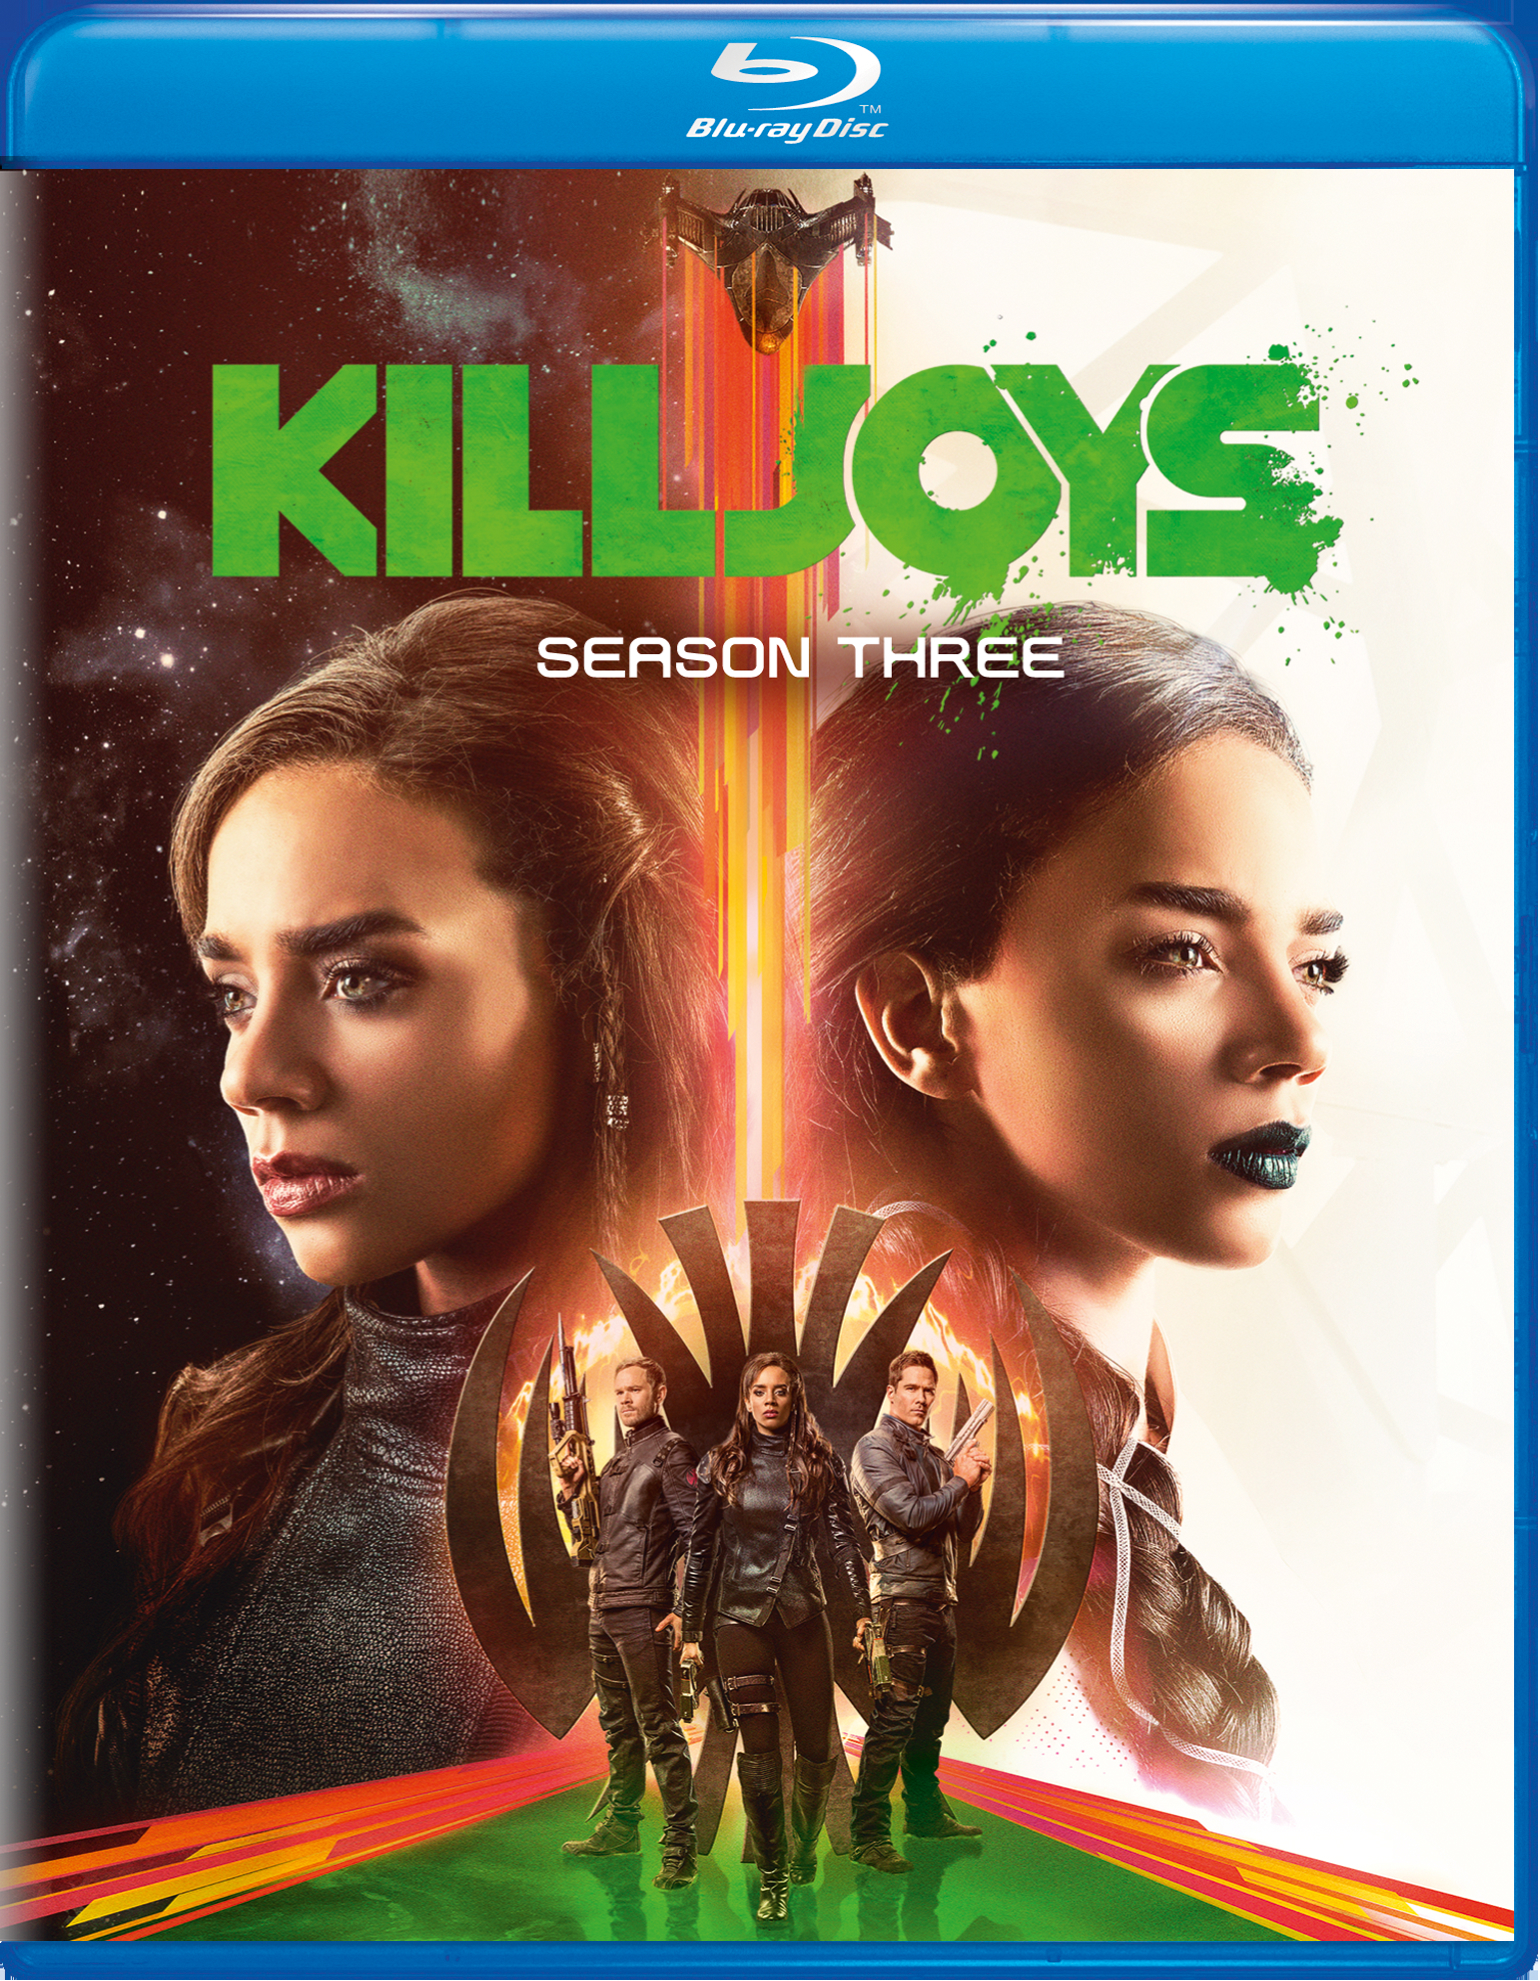 Killjoys: Season Three - Blu-ray   - Sci Fi Television On Blu-ray - TV Shows On GRUV